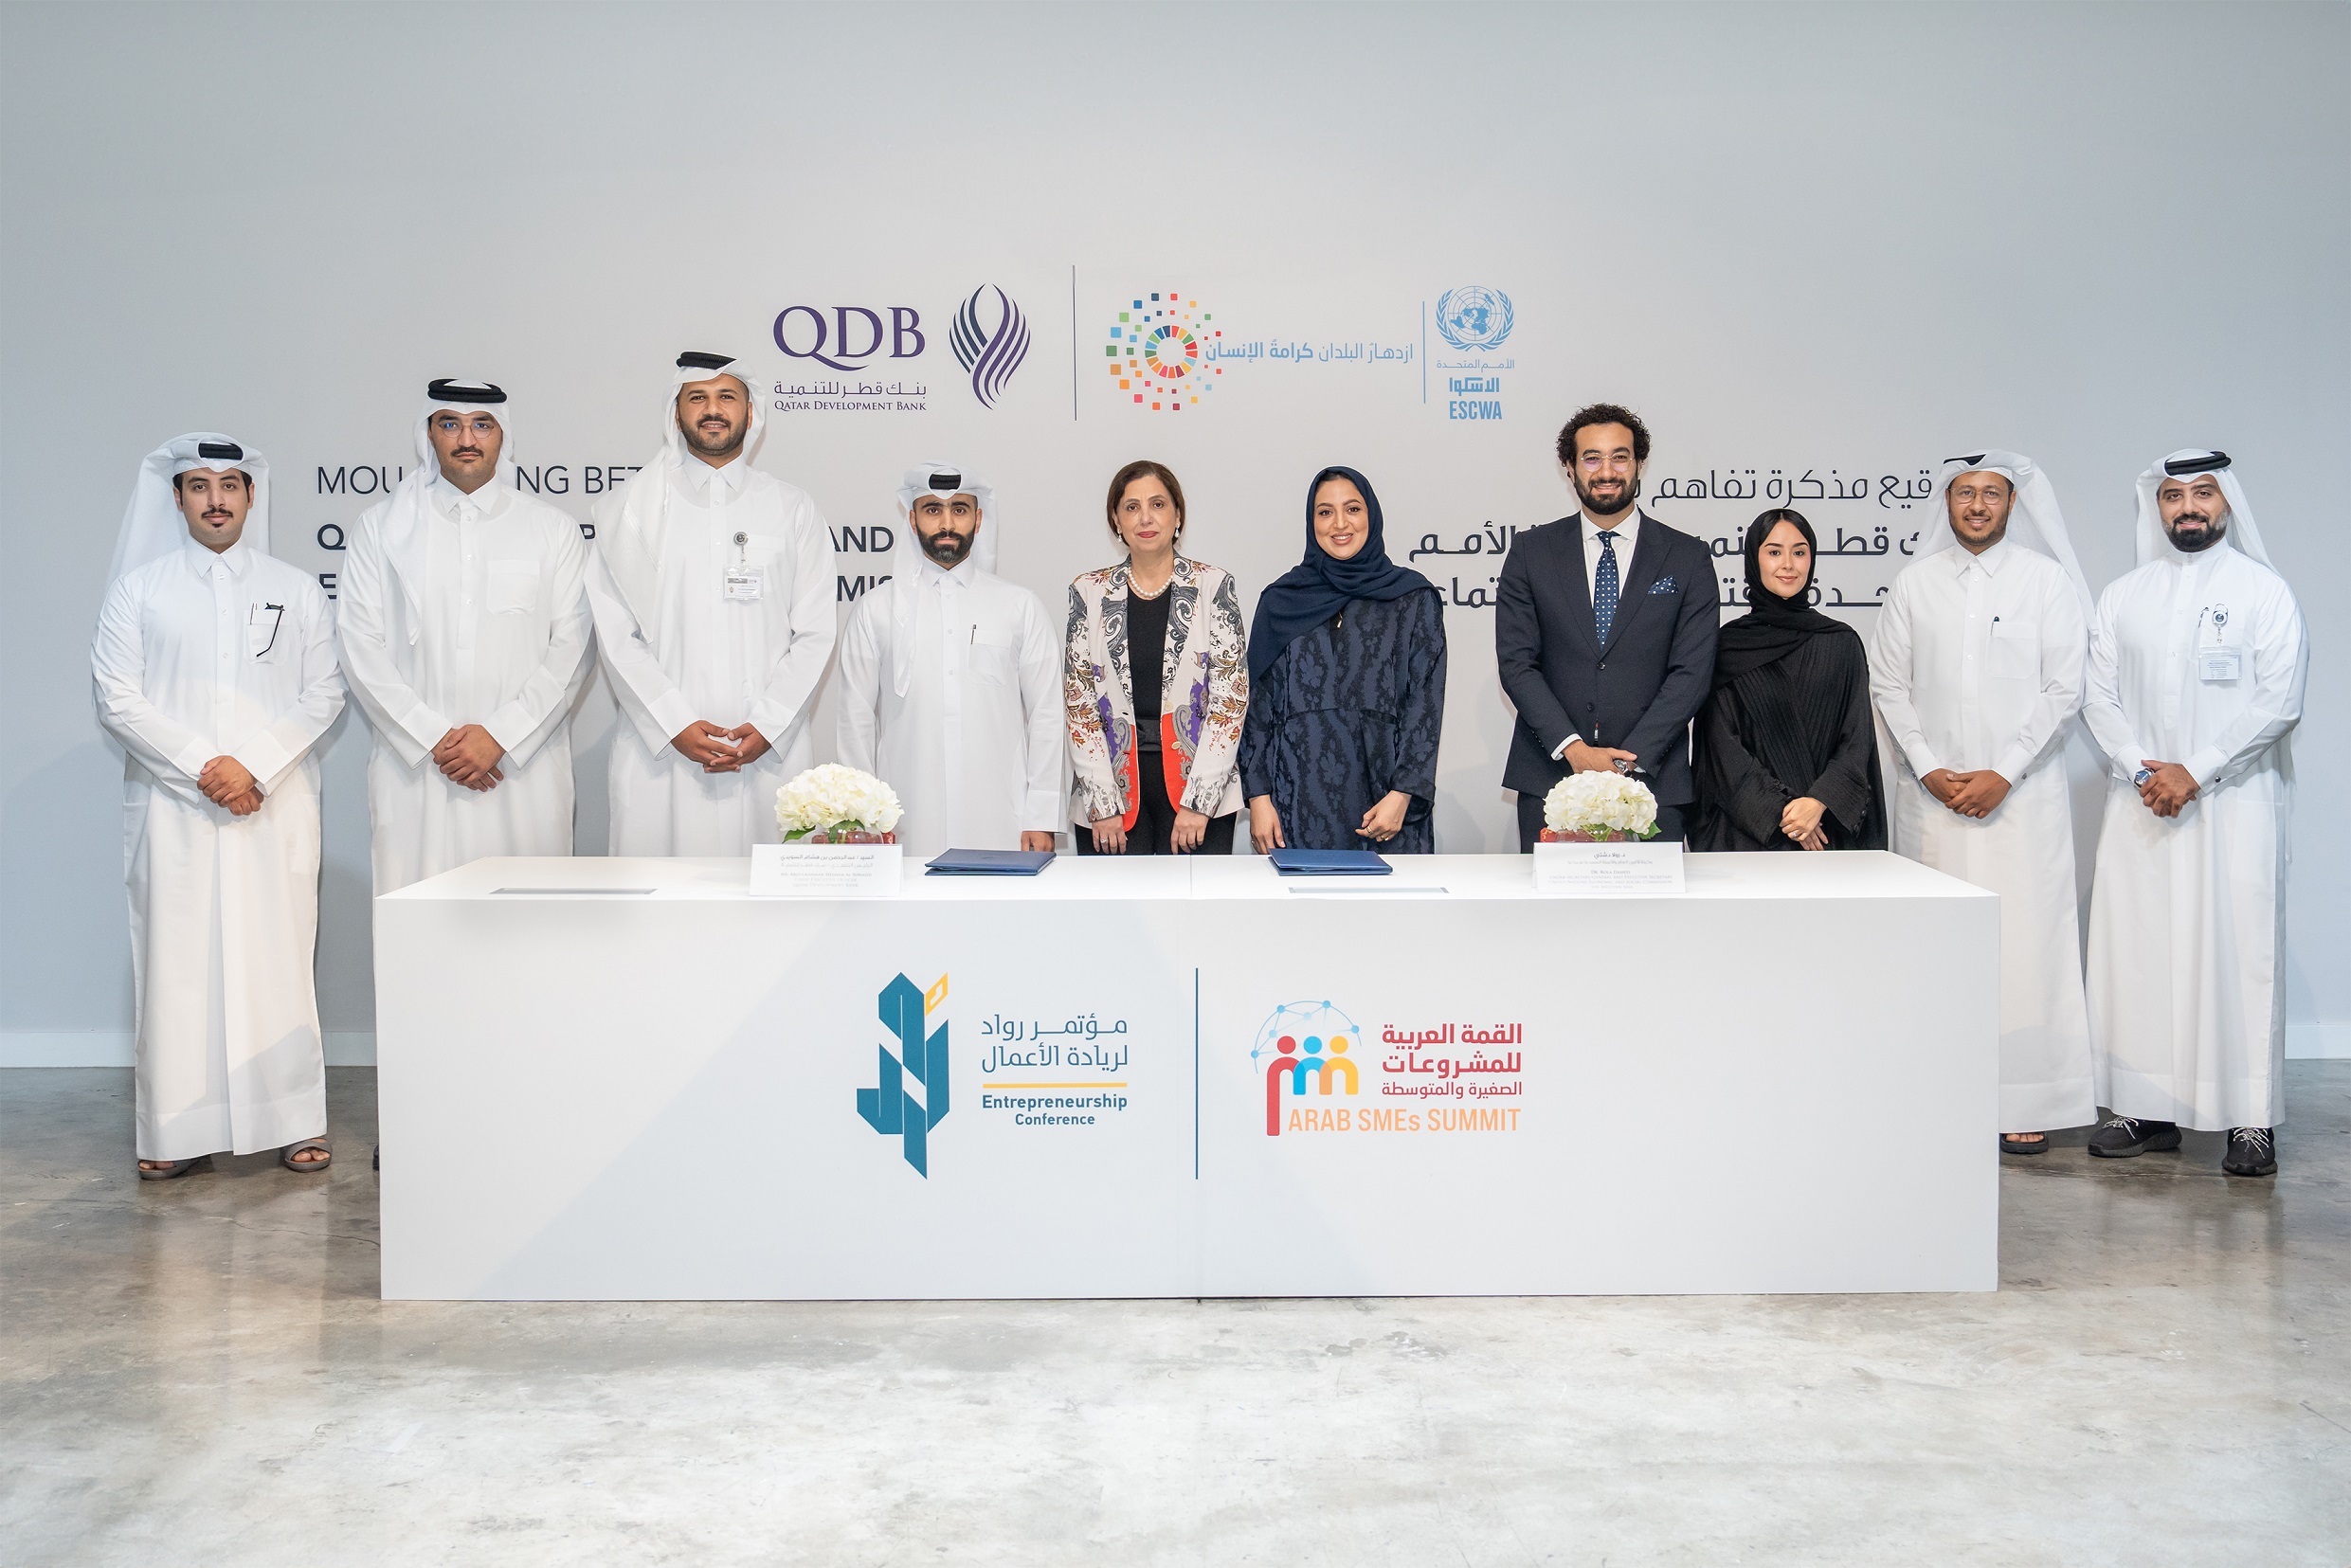 ESCWA signs MoU with Qatar Development Bank on hosting third Arab SMEs Summit